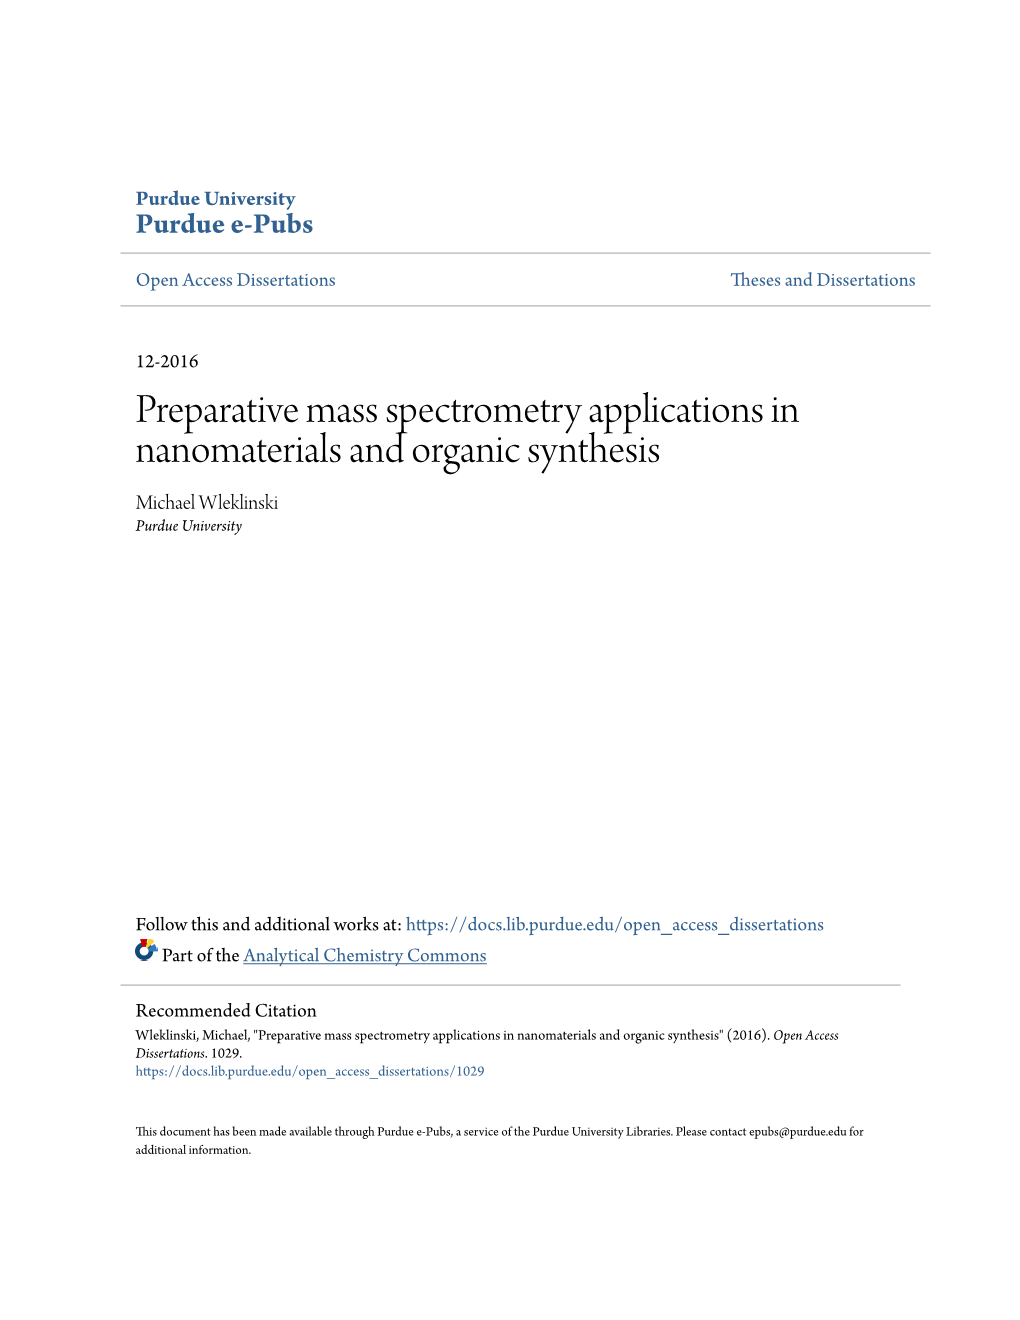 Preparative Mass Spectrometry Applications in Nanomaterials and Organic Synthesis Michael Wleklinski Purdue University